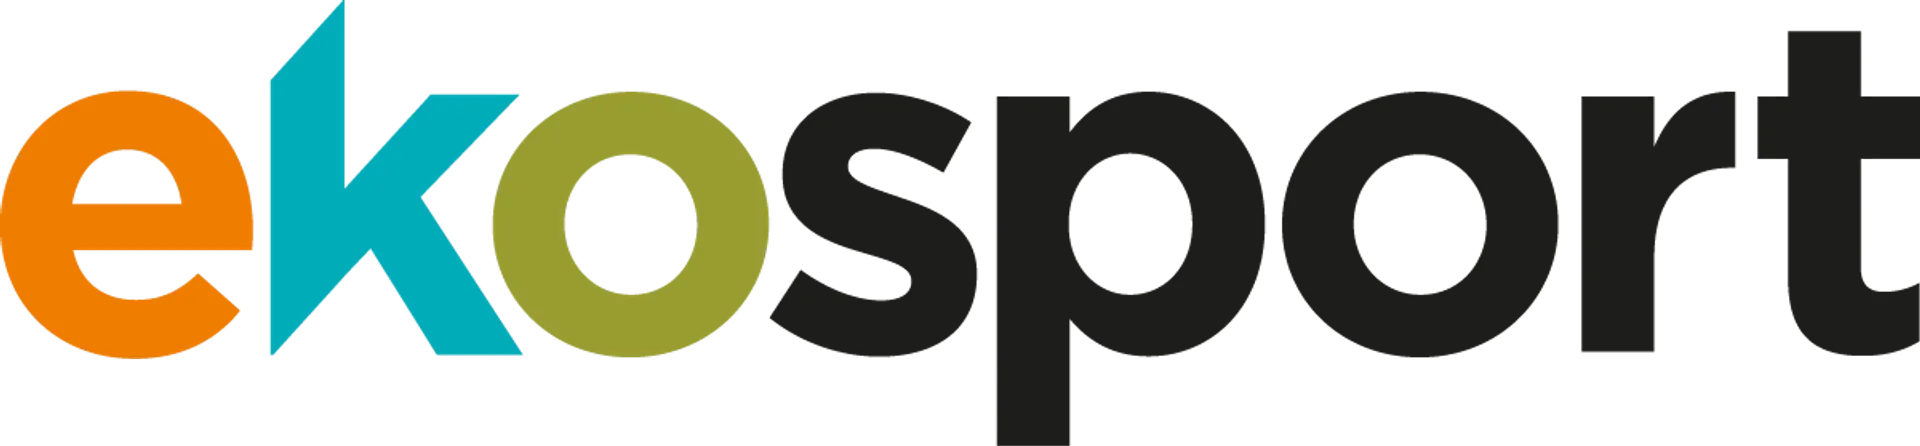 EKOSPORT logo du catalogue